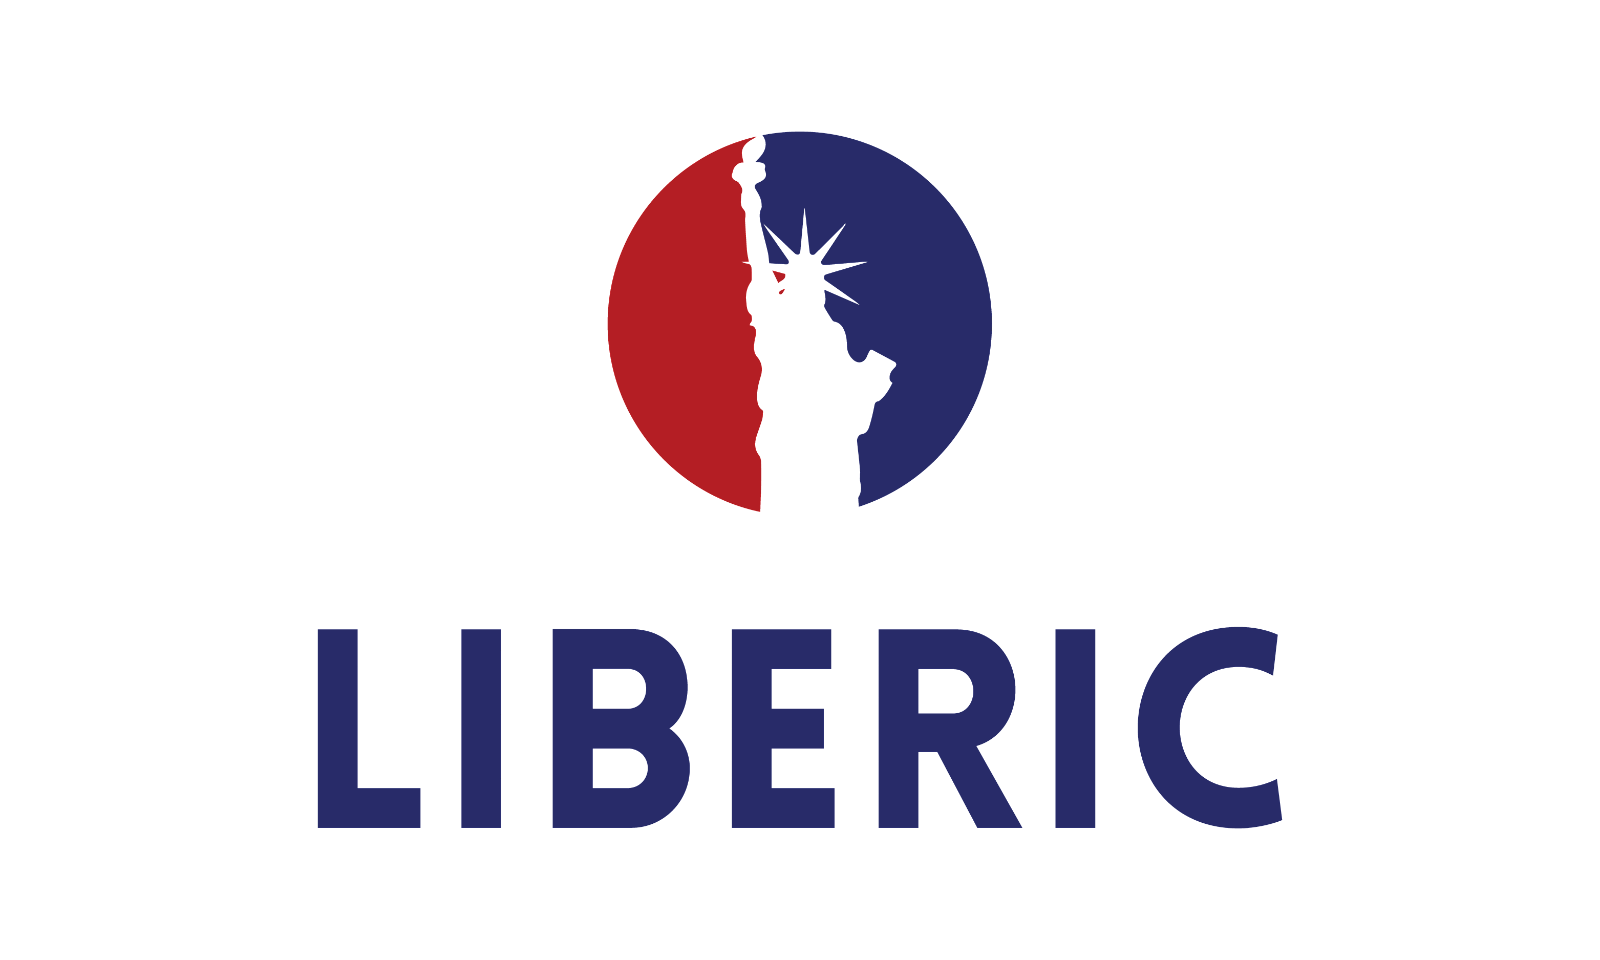 Liberic.com - Creative brandable domain for sale